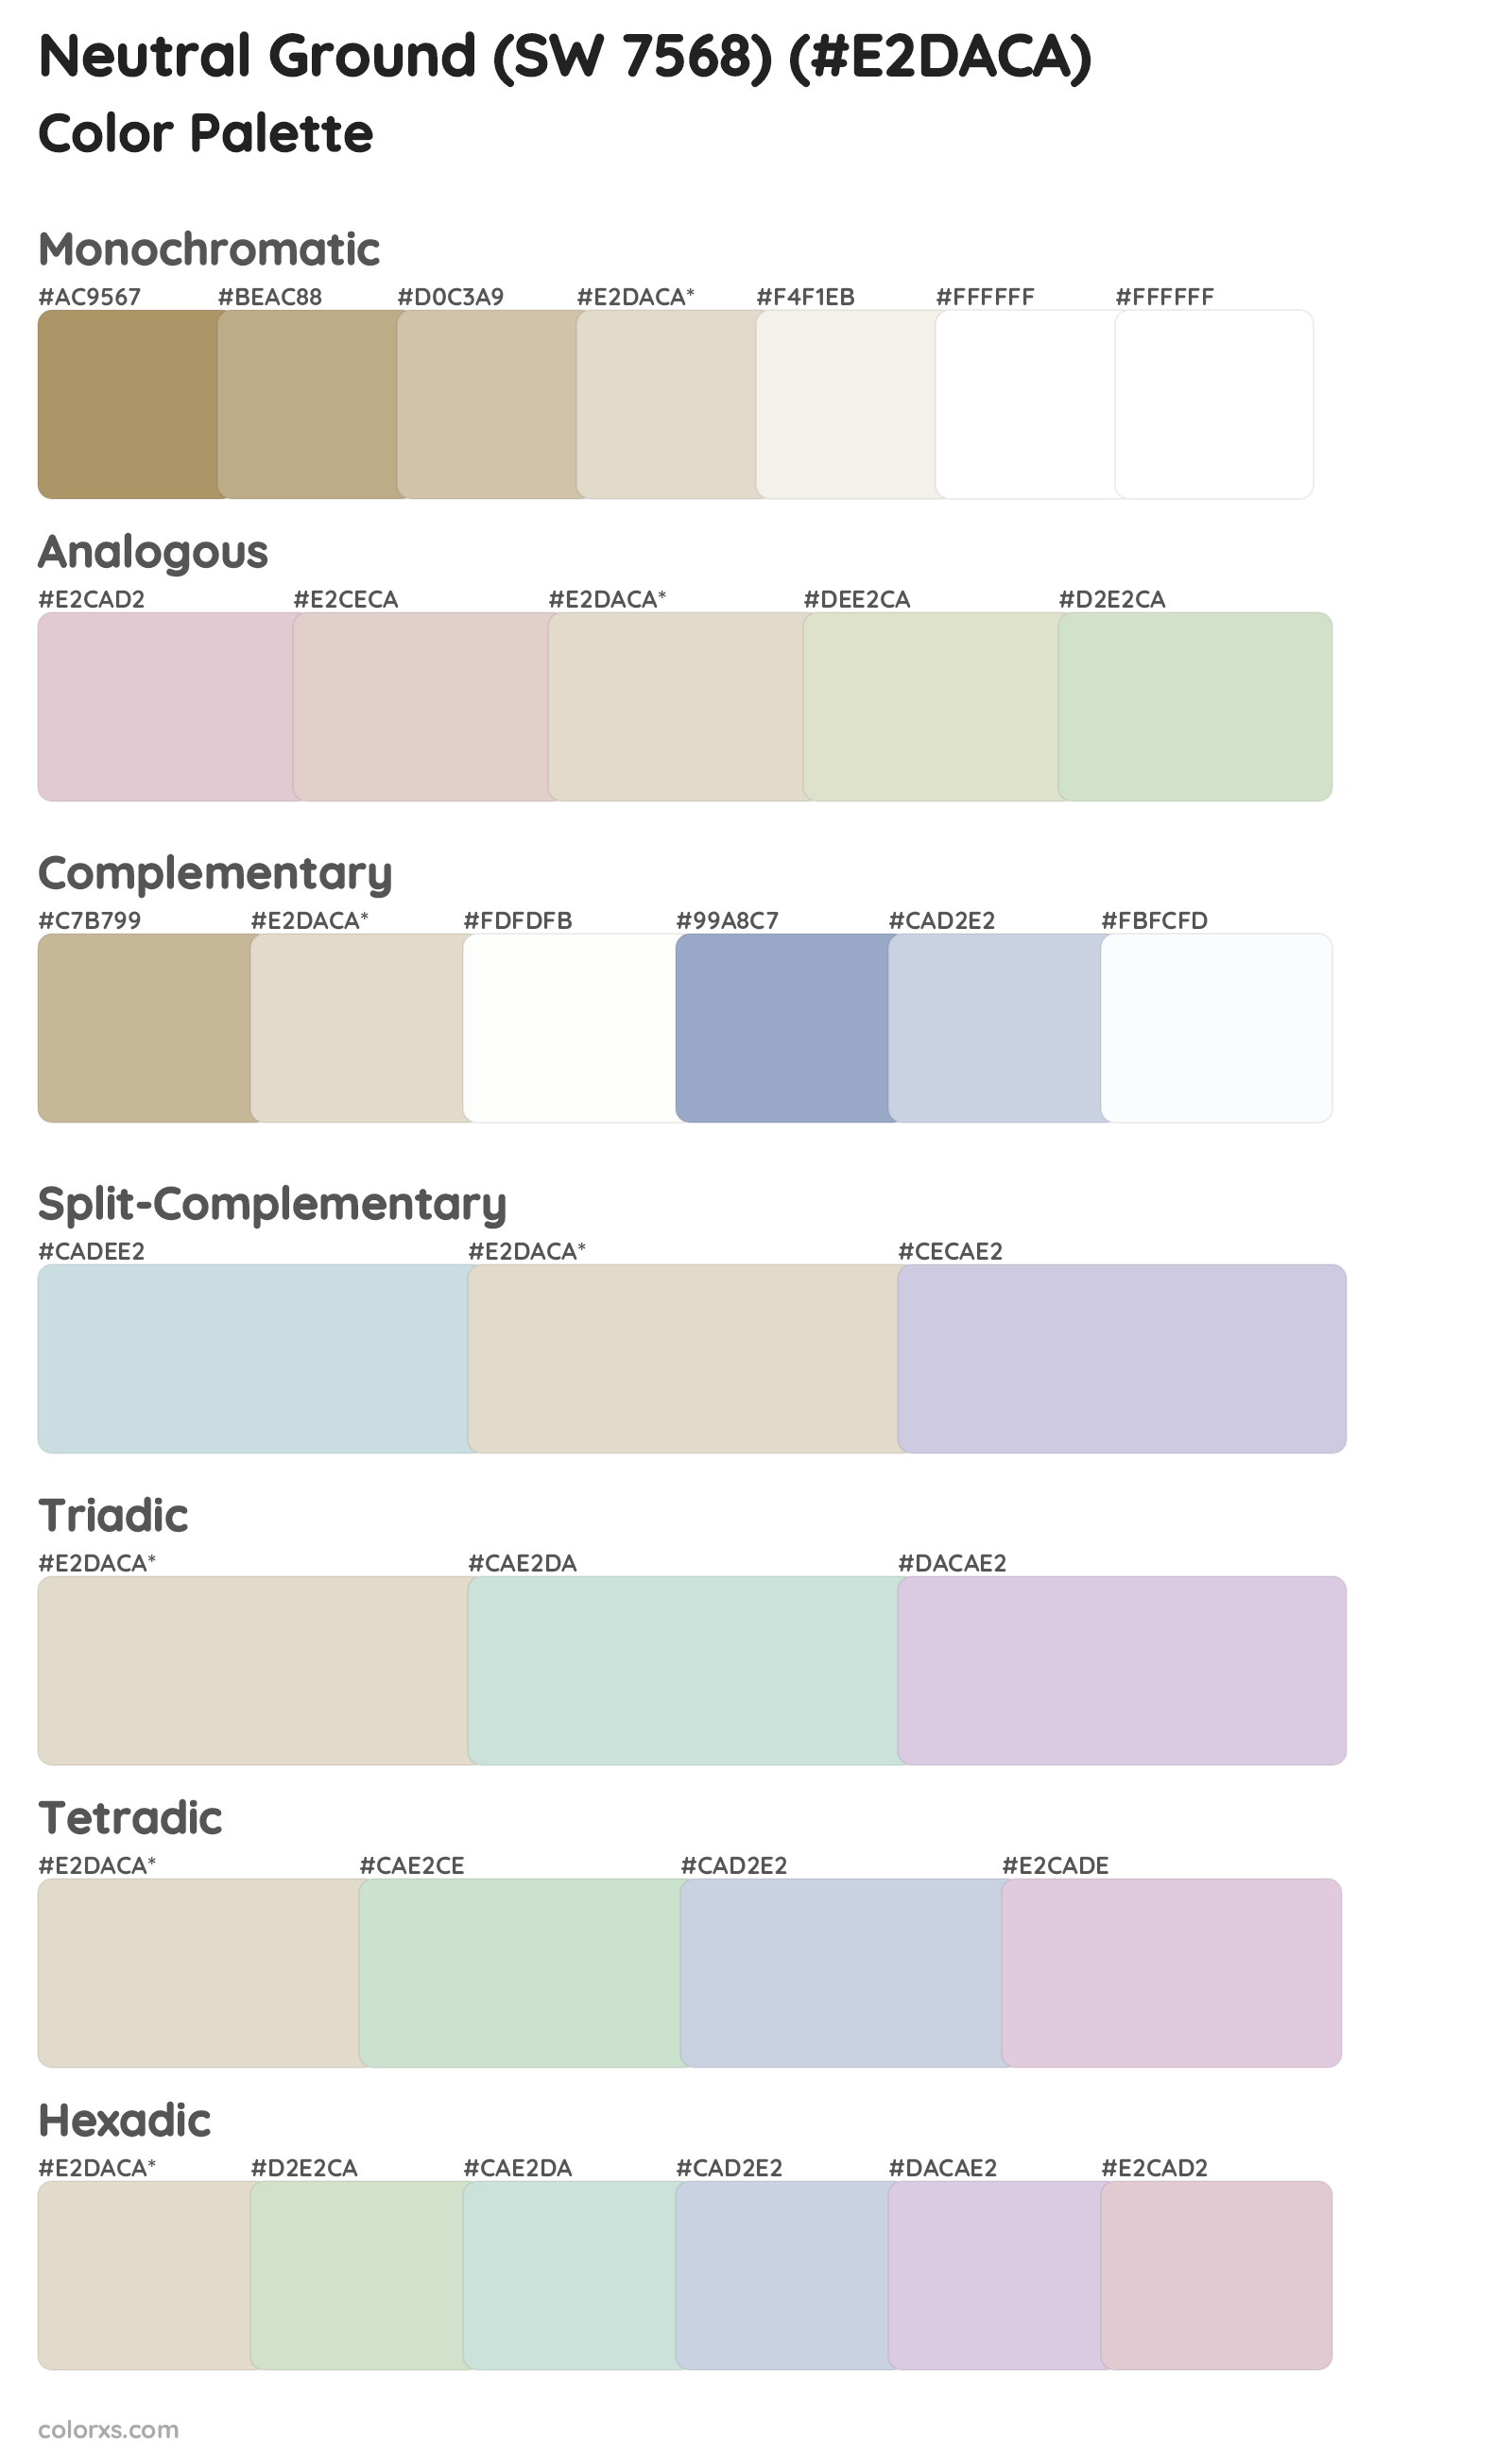 Neutral Ground (SW 7568) Color Scheme Palettes